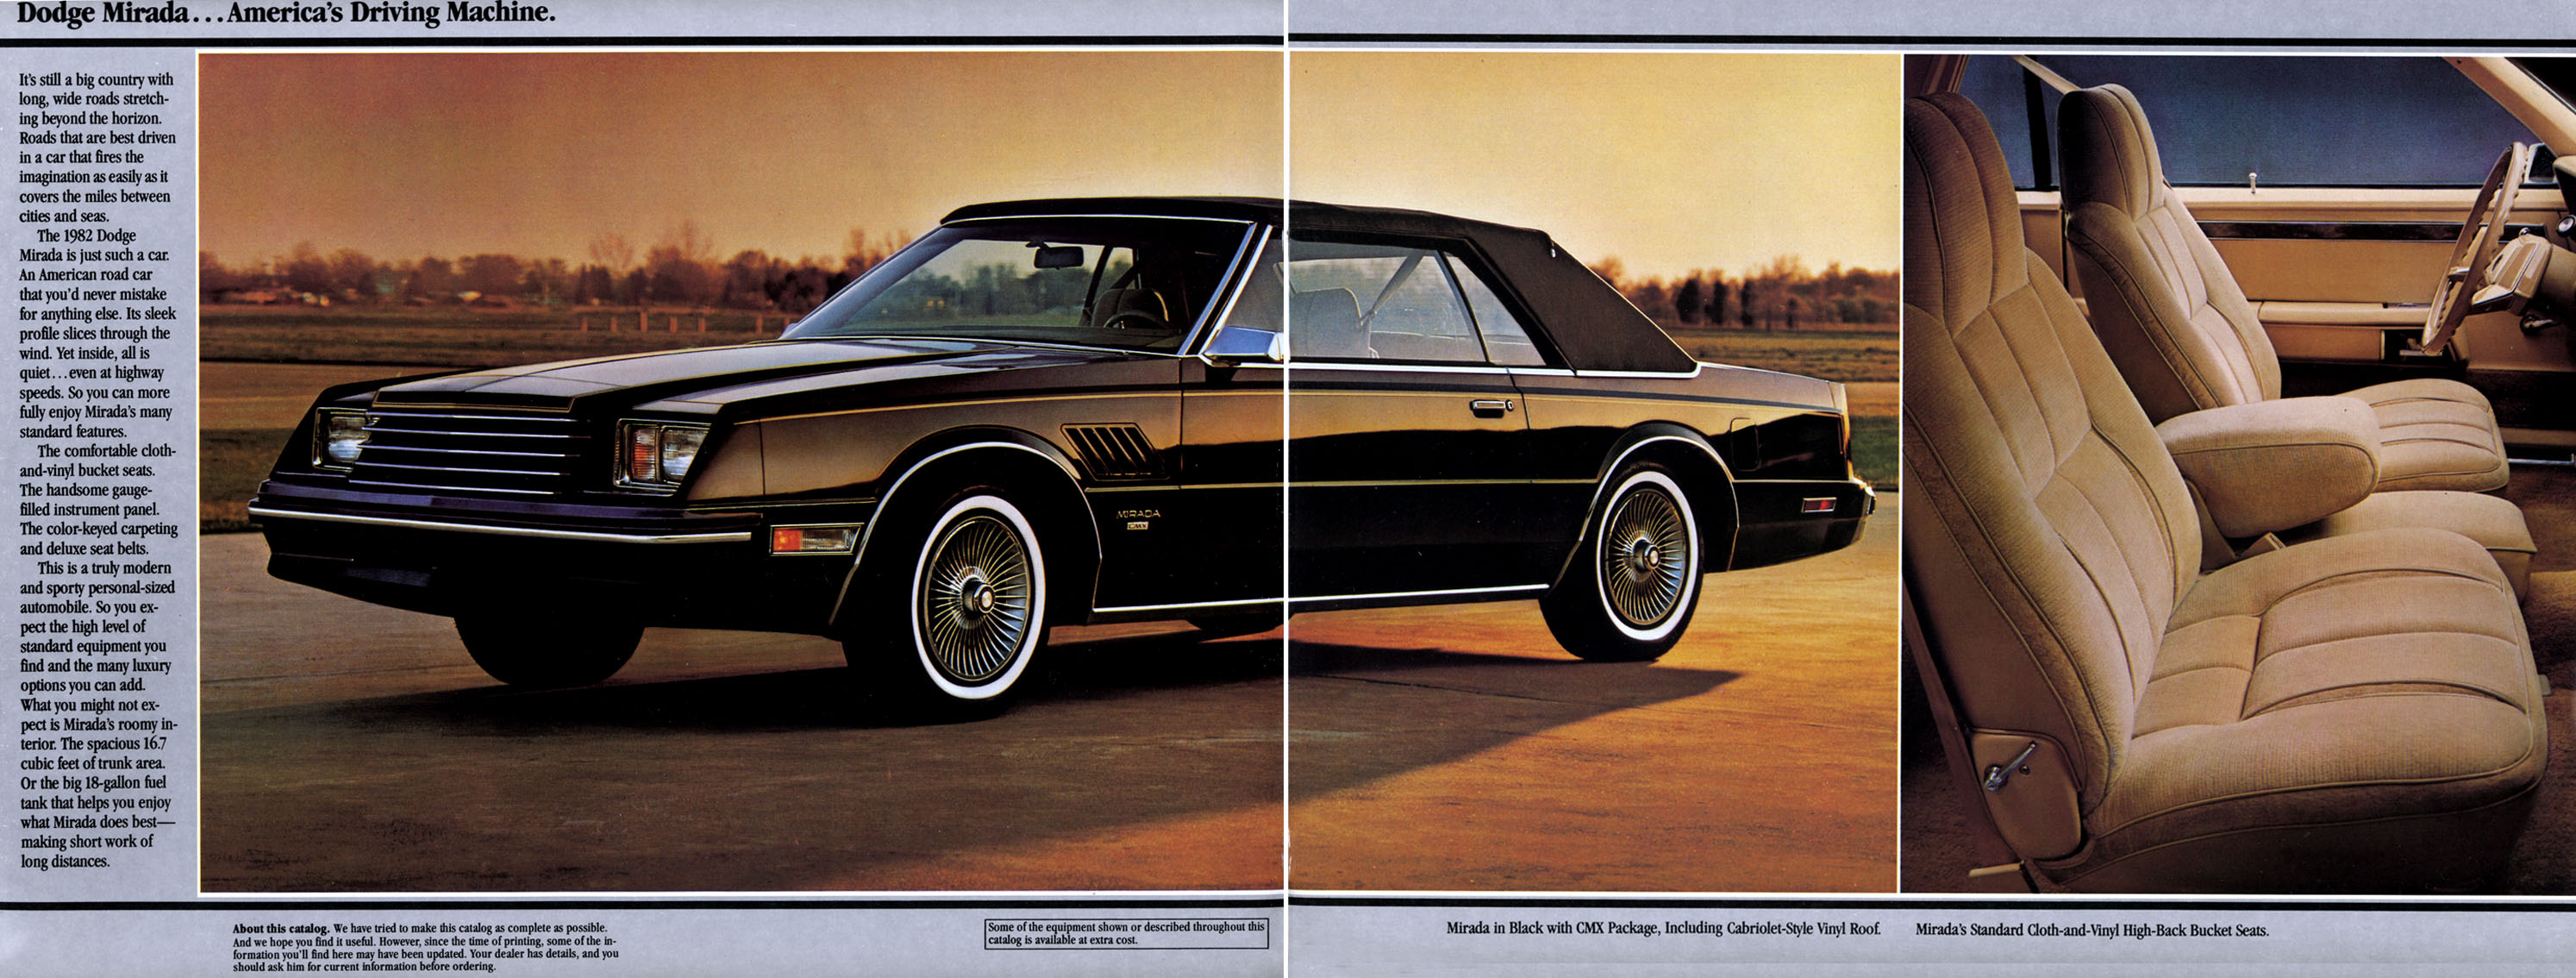 1982 Dodge Mirada Brochure Page 2